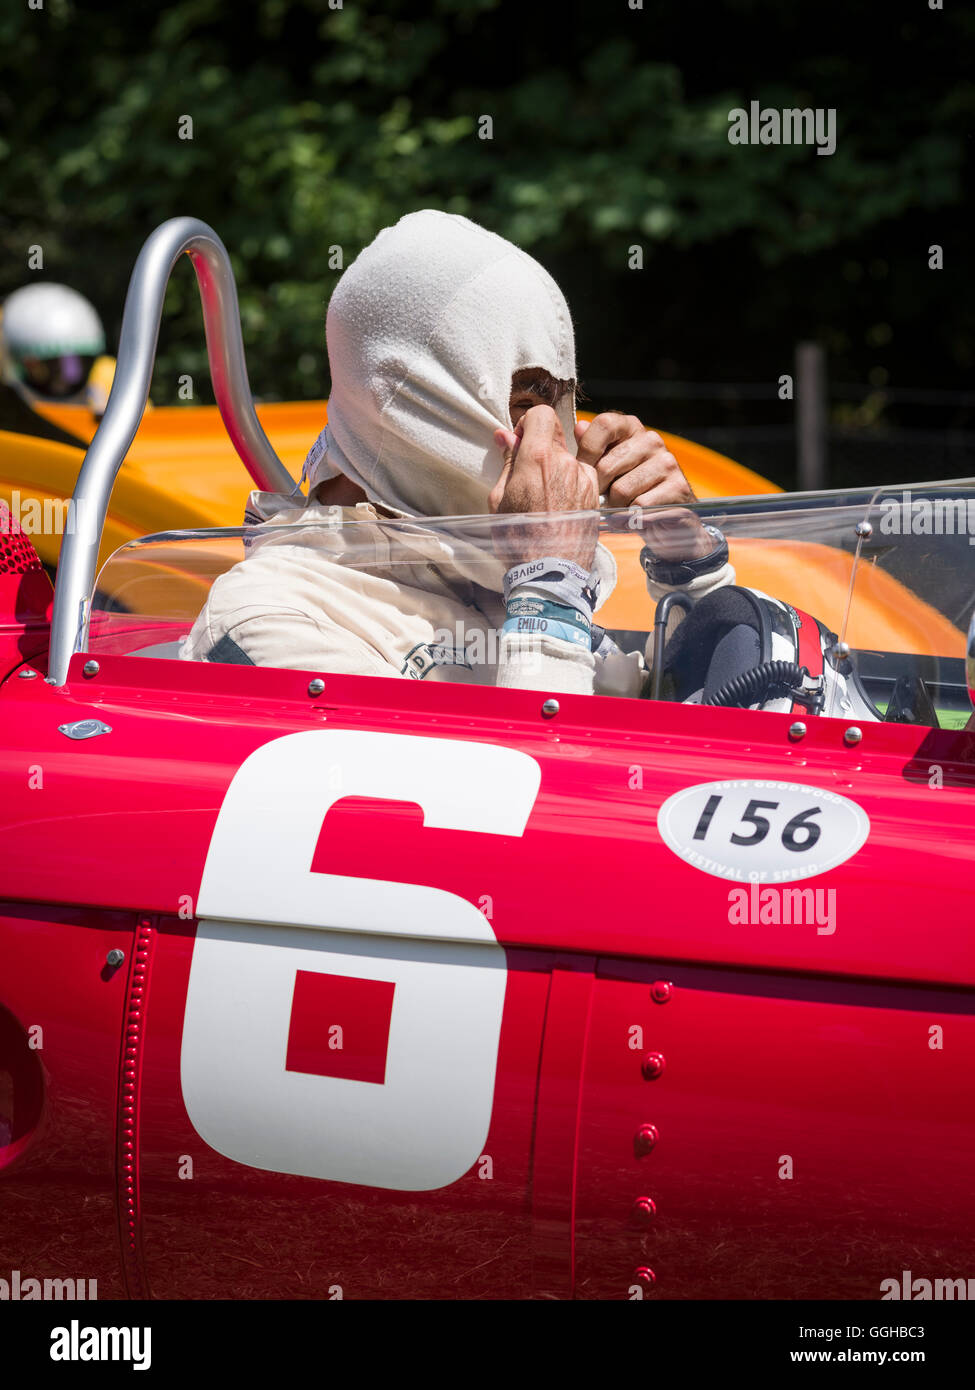 Emanuele Pirro, cinco veces ganador de Le Mans, 1961 Ferrari 156 Sharknose, Festival de Velocidad de Goodwood 2014, carreras, coches de carreras, cl Foto de stock